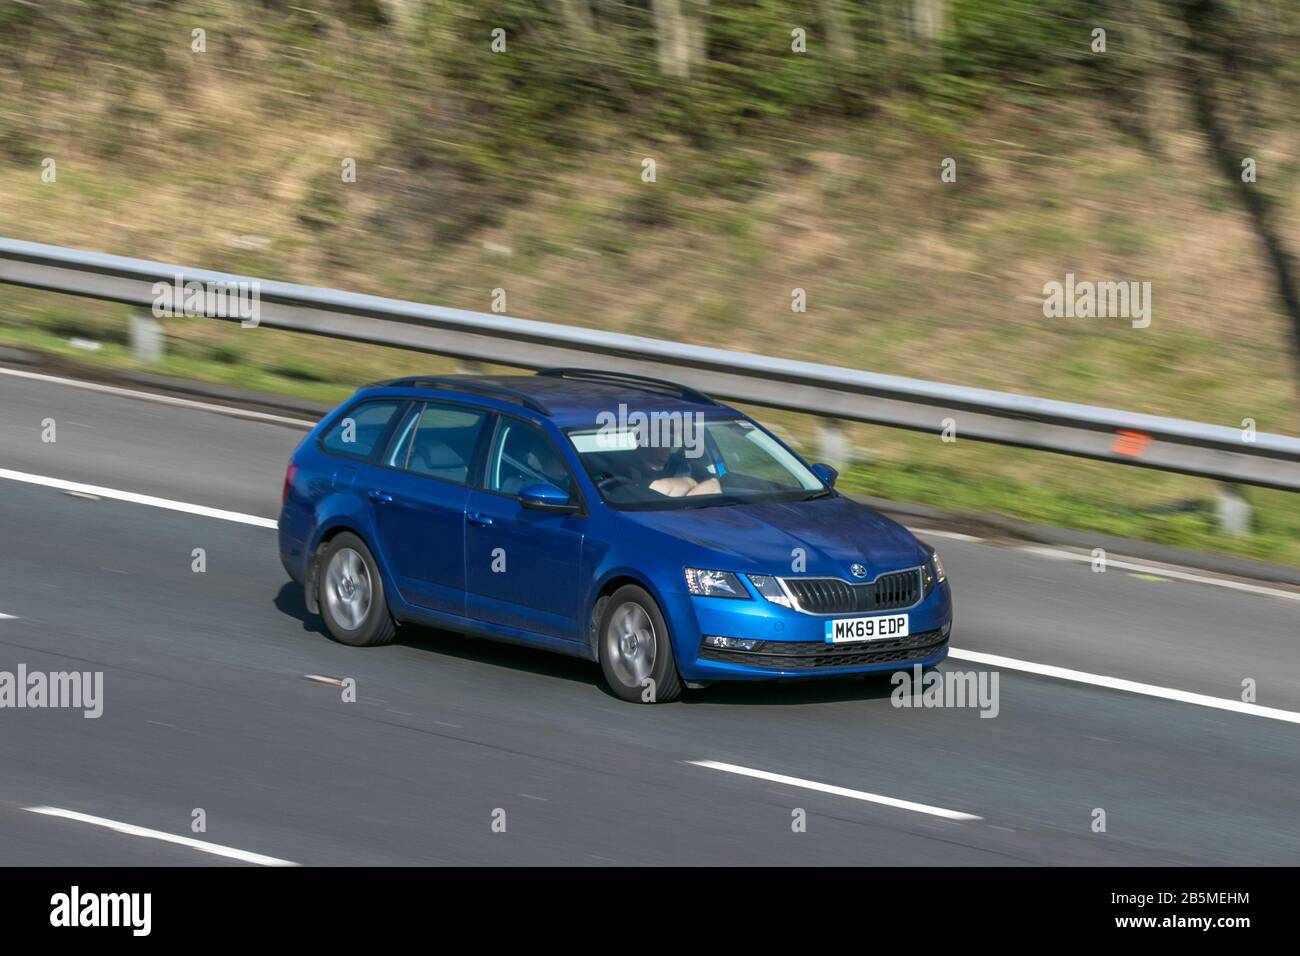 MK69EDP Skoda Octavia Se Tdi S-A Blue Car Diesel driving on the M6 motorway near Preston in Lancashire, Uk Stock Photo